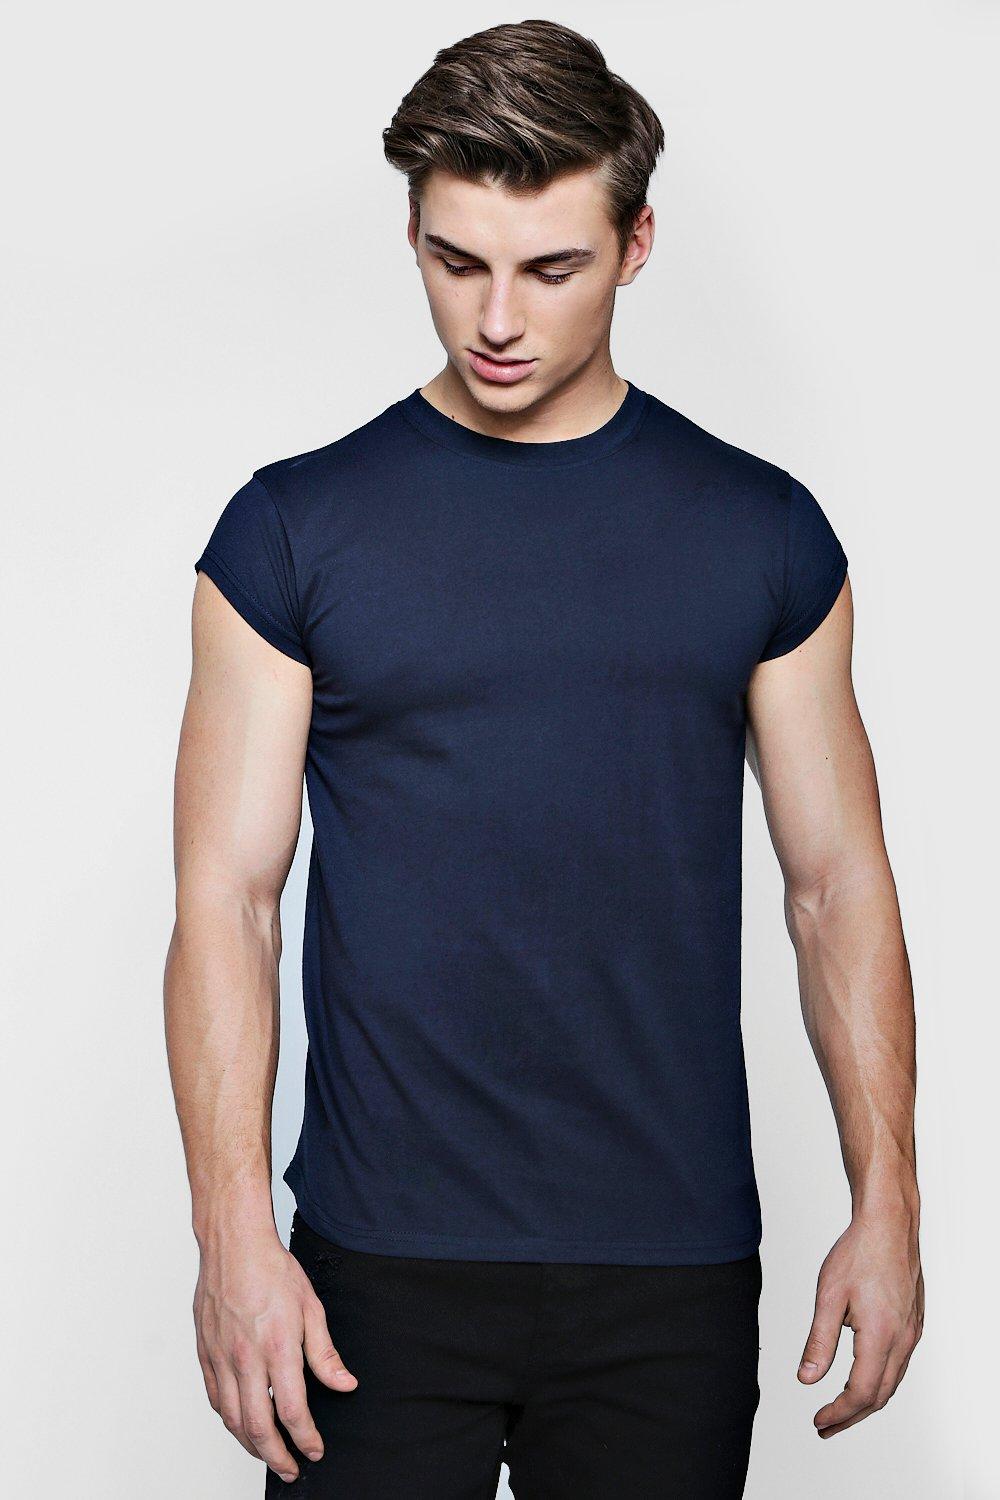 Boohoo Mens Longline Loose Fit Cap Sleeve T Shirt | eBay